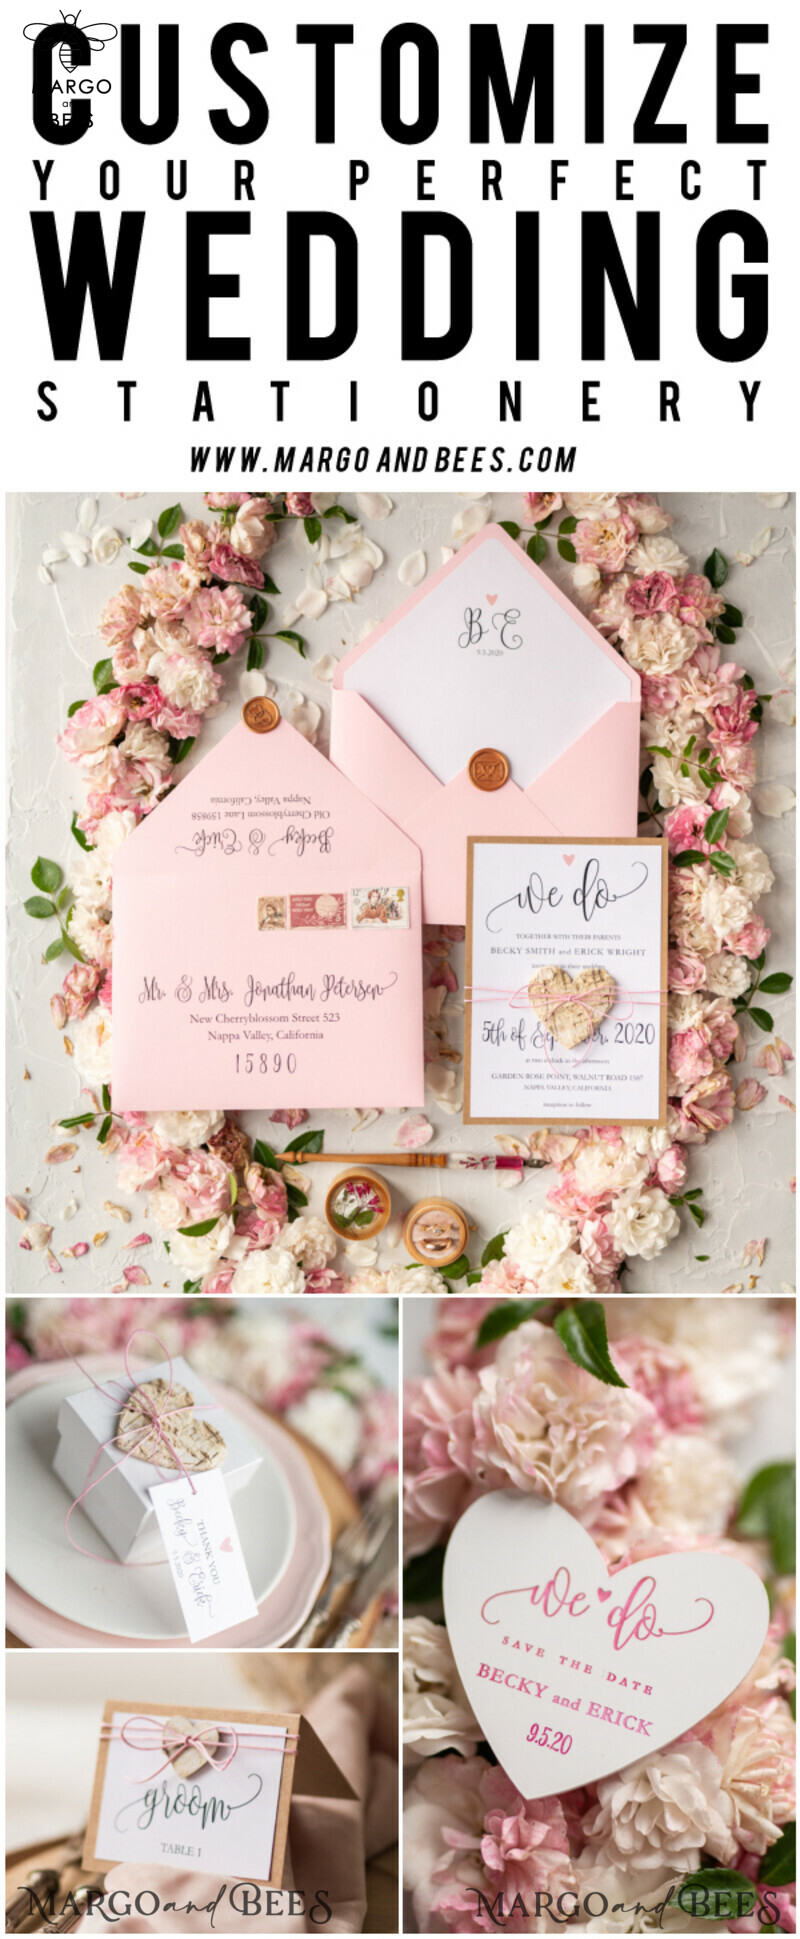 Vintage Wooden Wedding Invitations: Handmade, Elegant Birch Heart Wedding Cards & Bespoke Pink Wedding Invites with Unique Vintage Touch - Exquisite Handmade Wedding Stationery-18